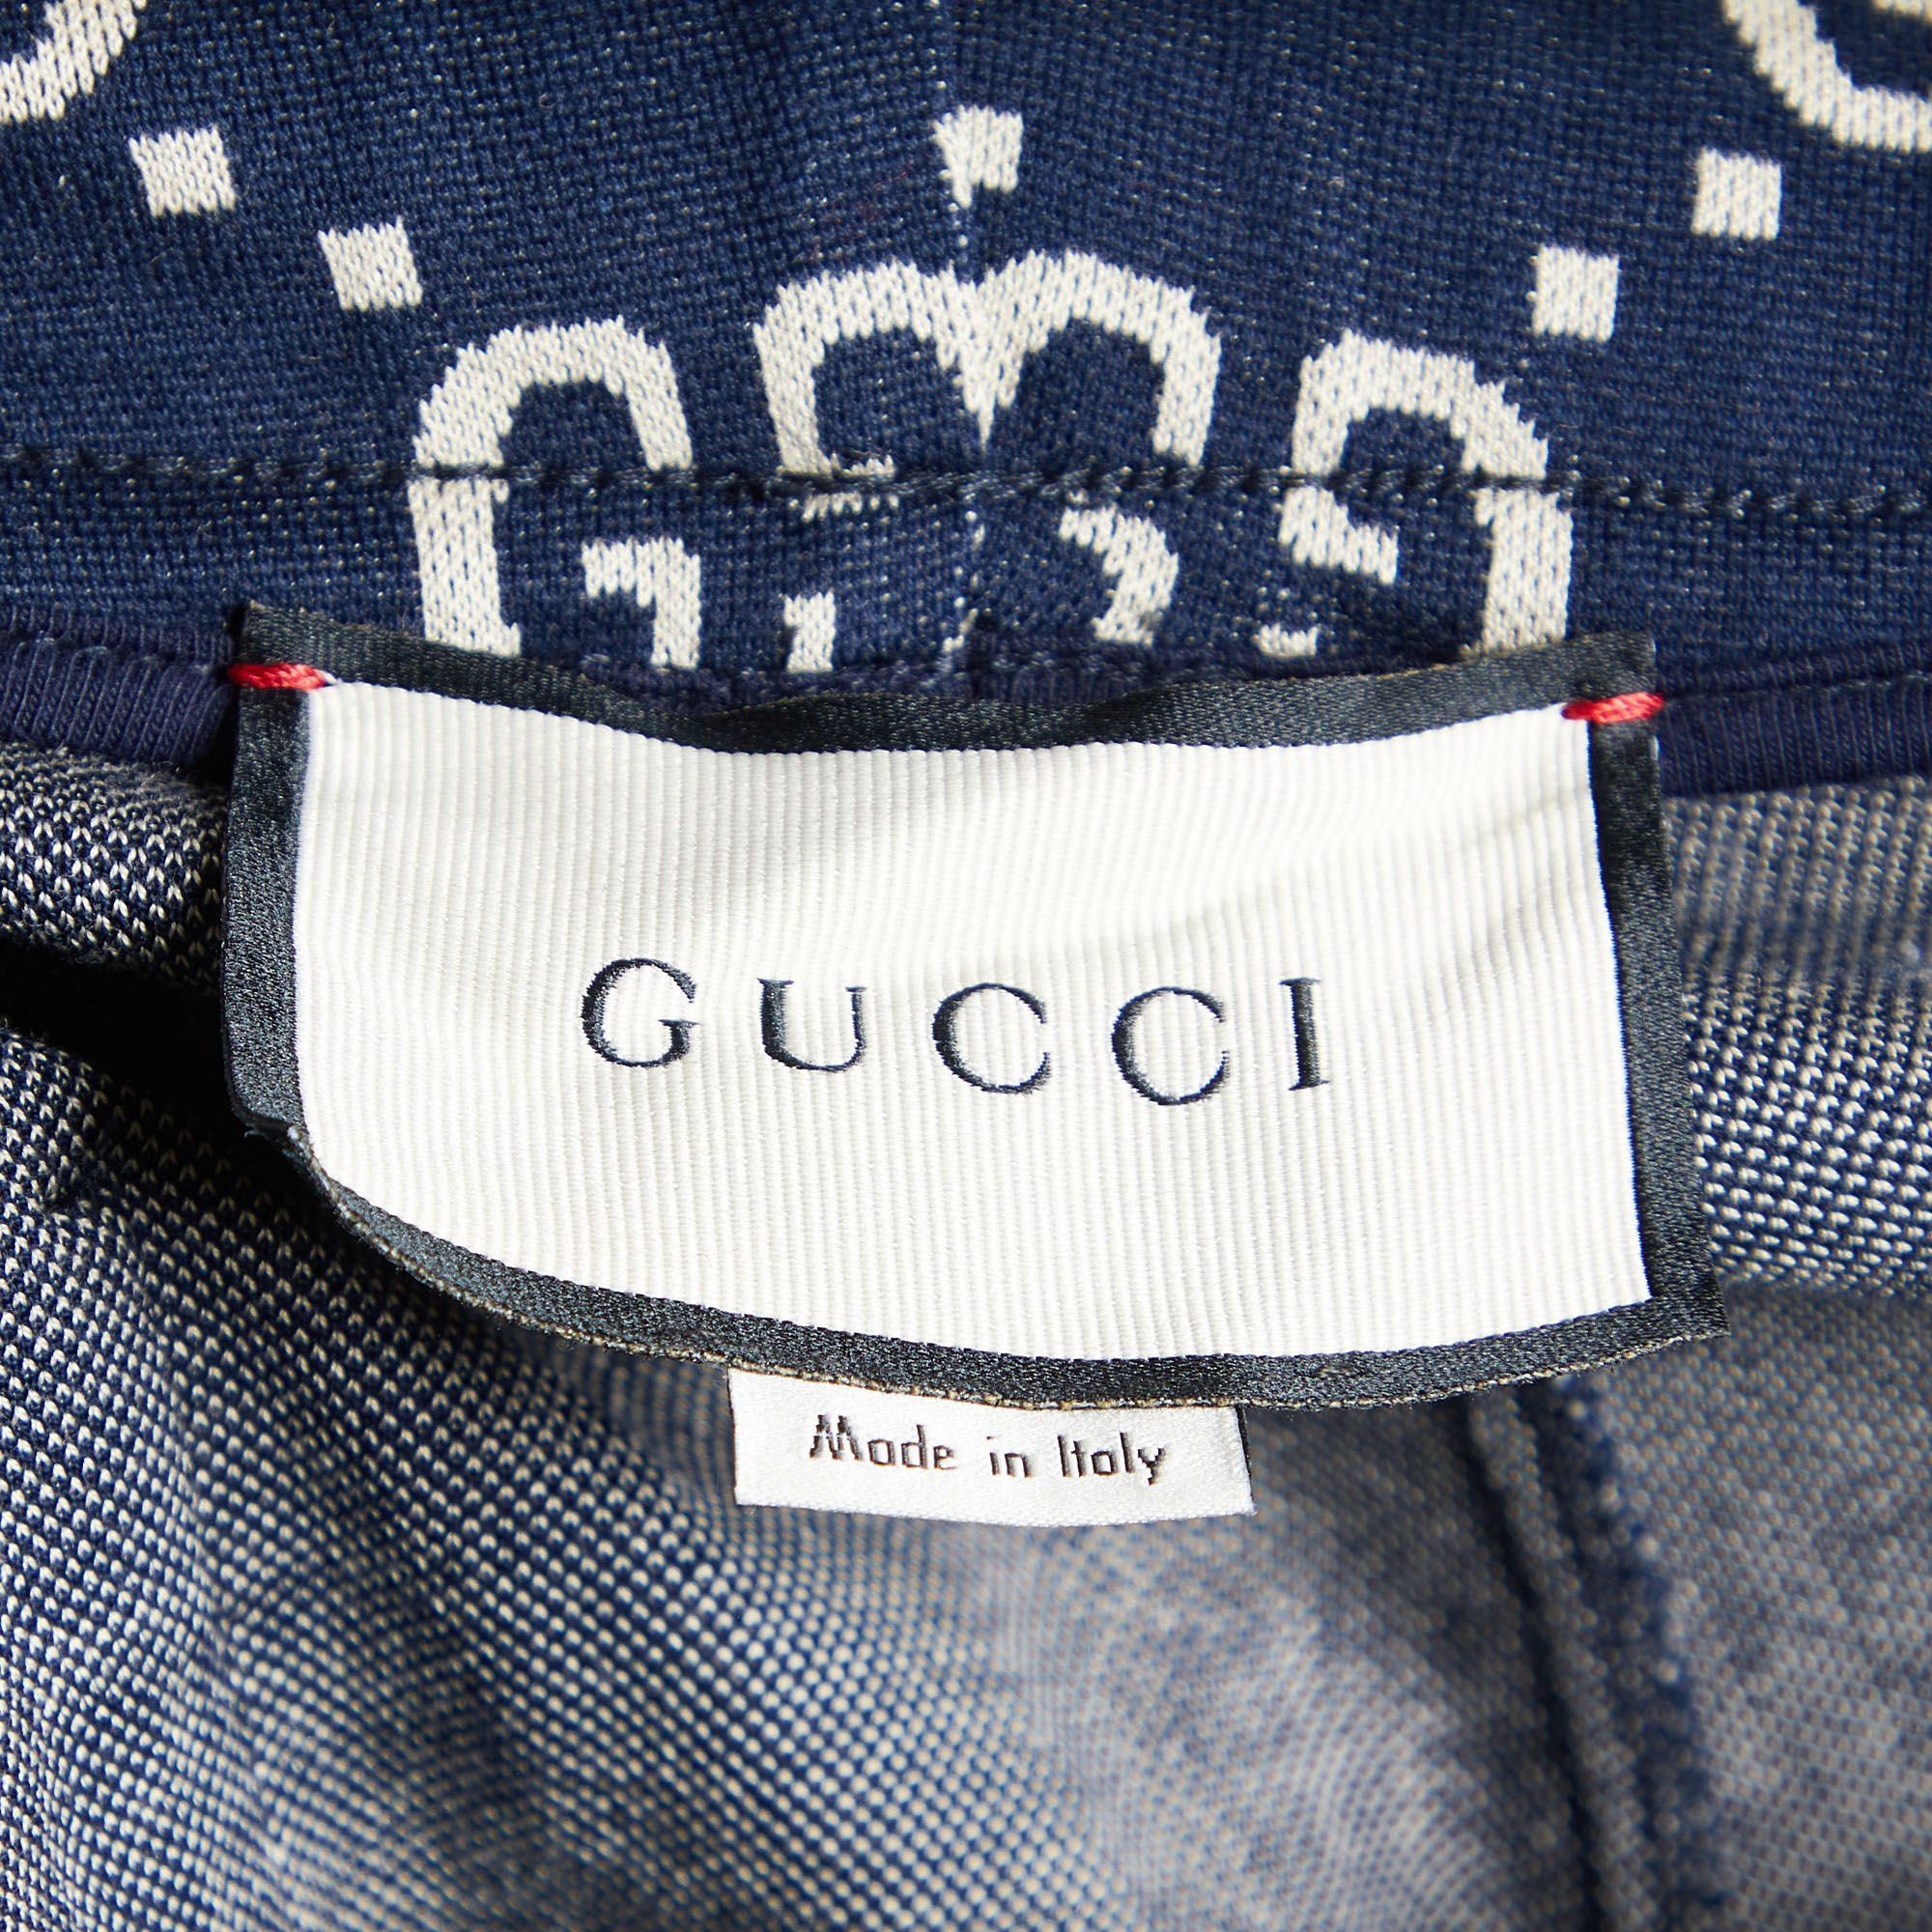 Gucci Navy Blue GG Jacquard Cotton Web Striped Shorts S